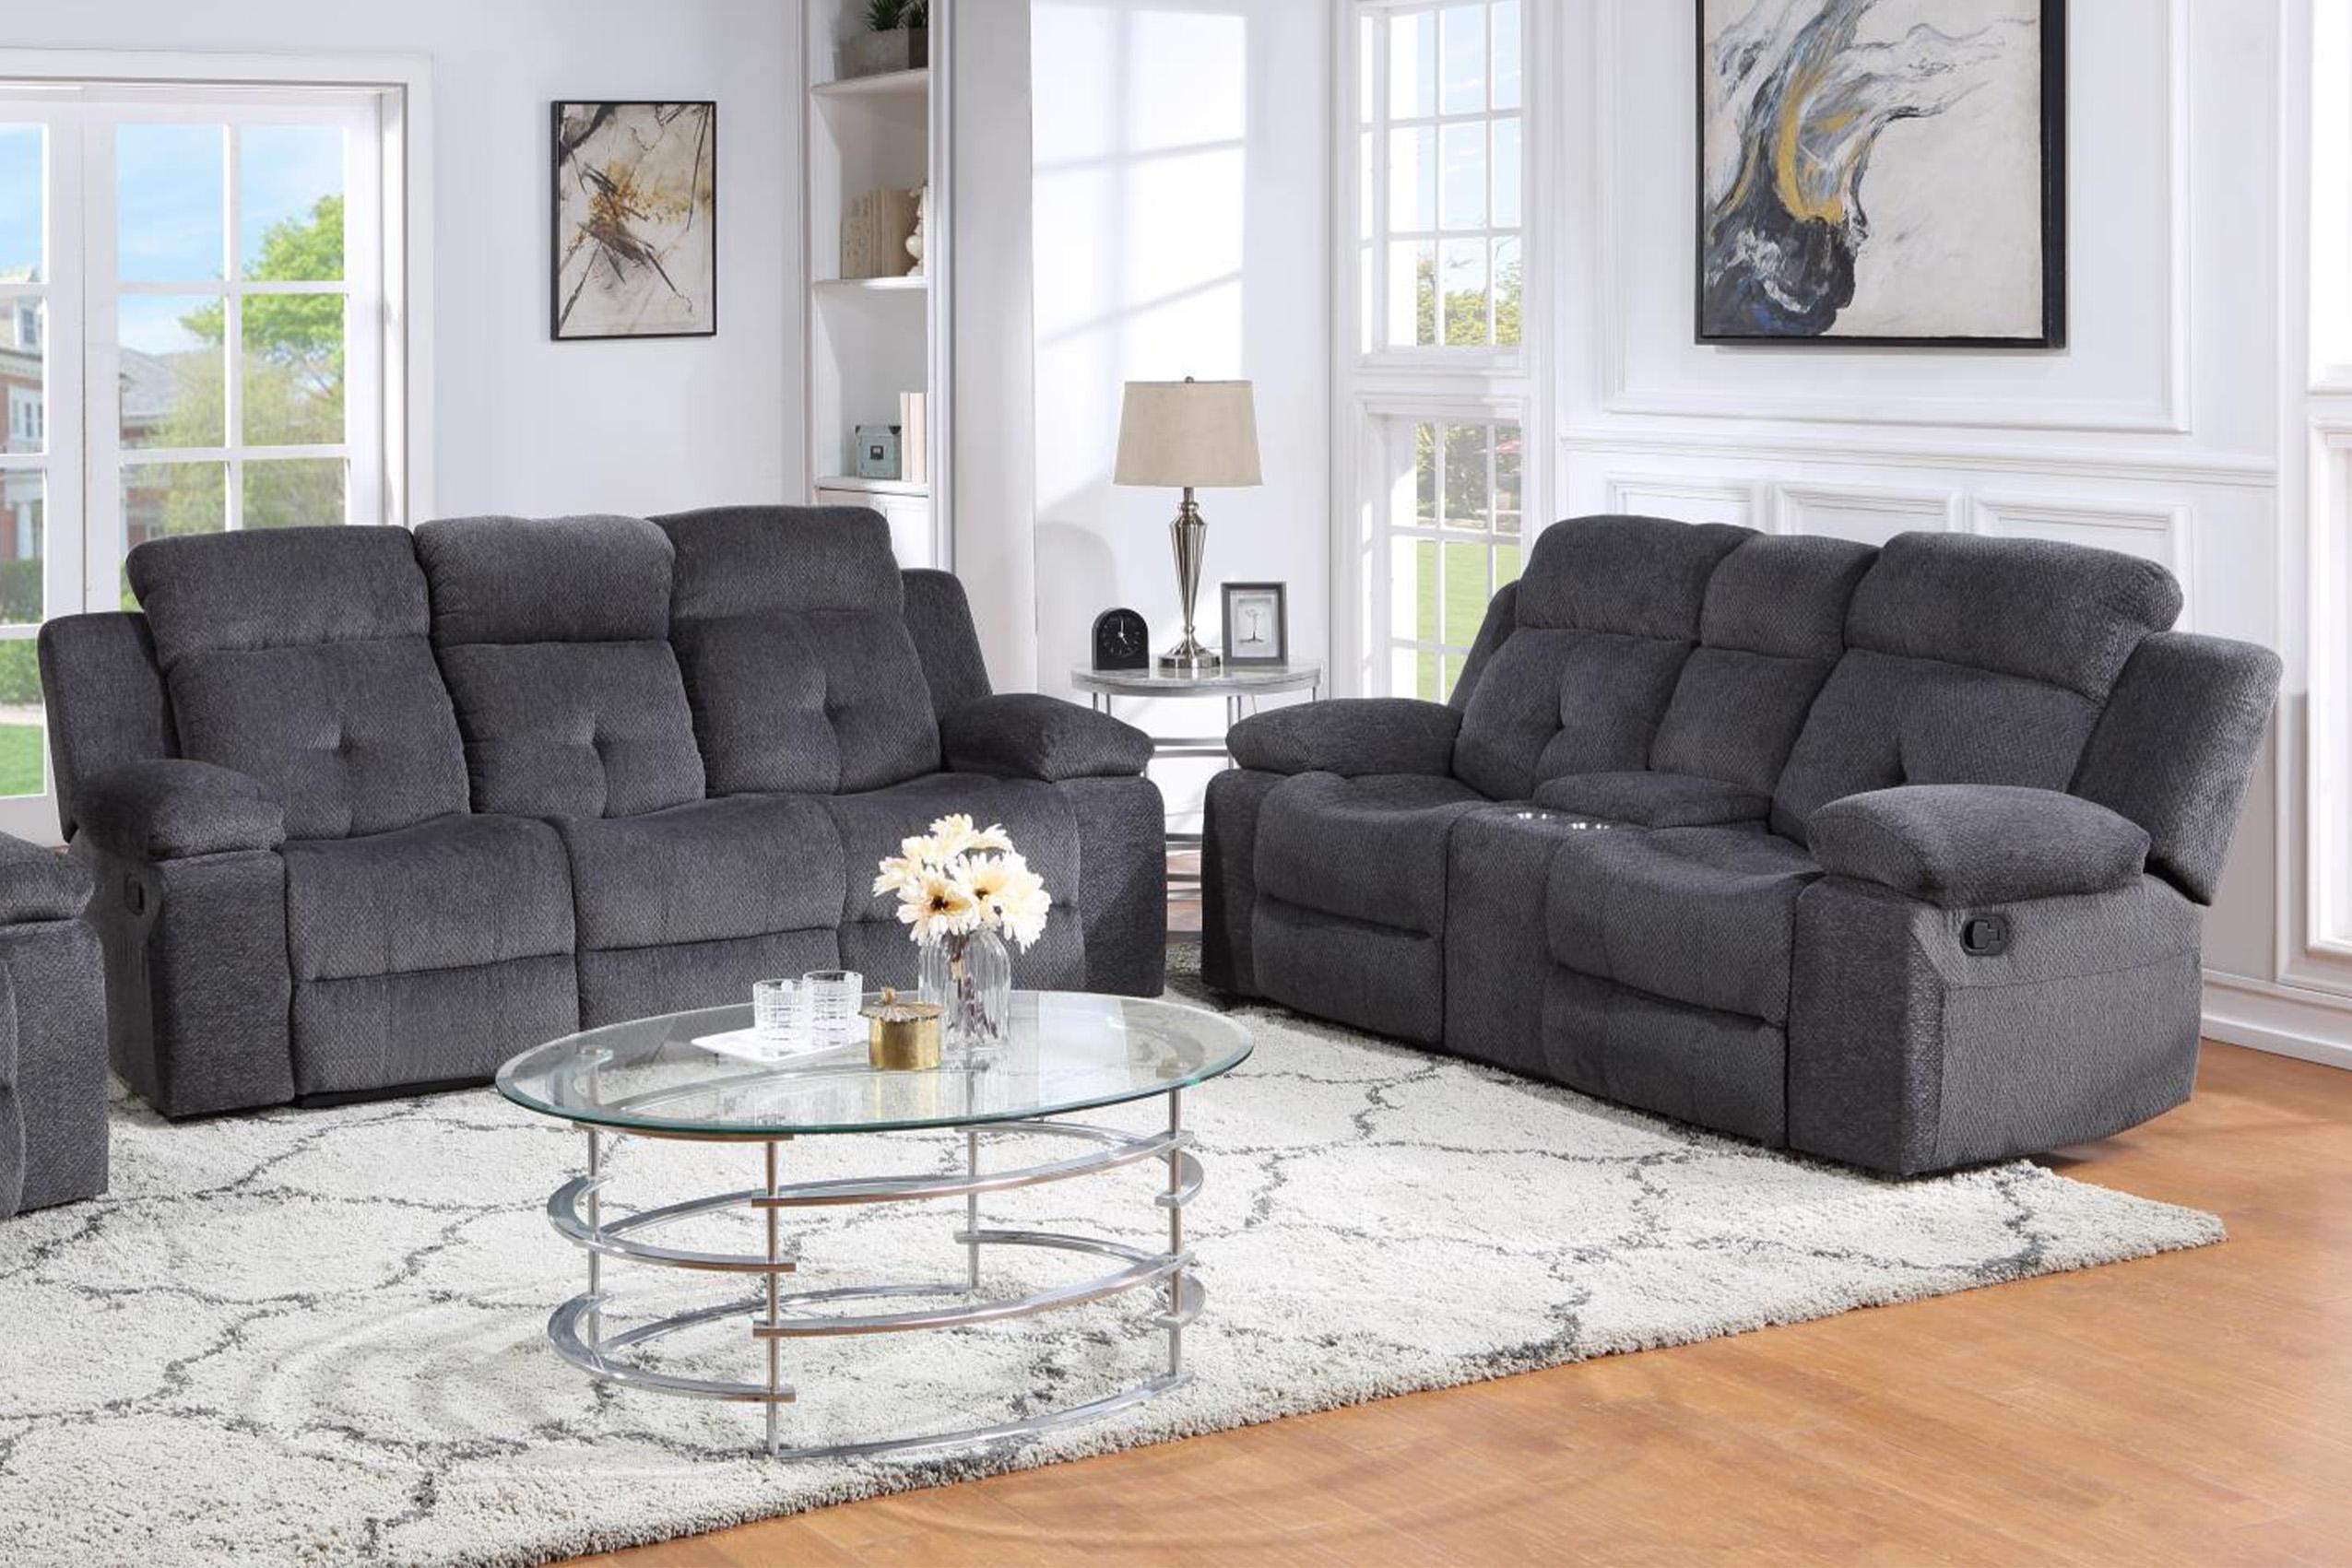 Contemporary, Modern Recliner Sofa Set PHOENIX PHOENIX-S-L in Gray Chenille